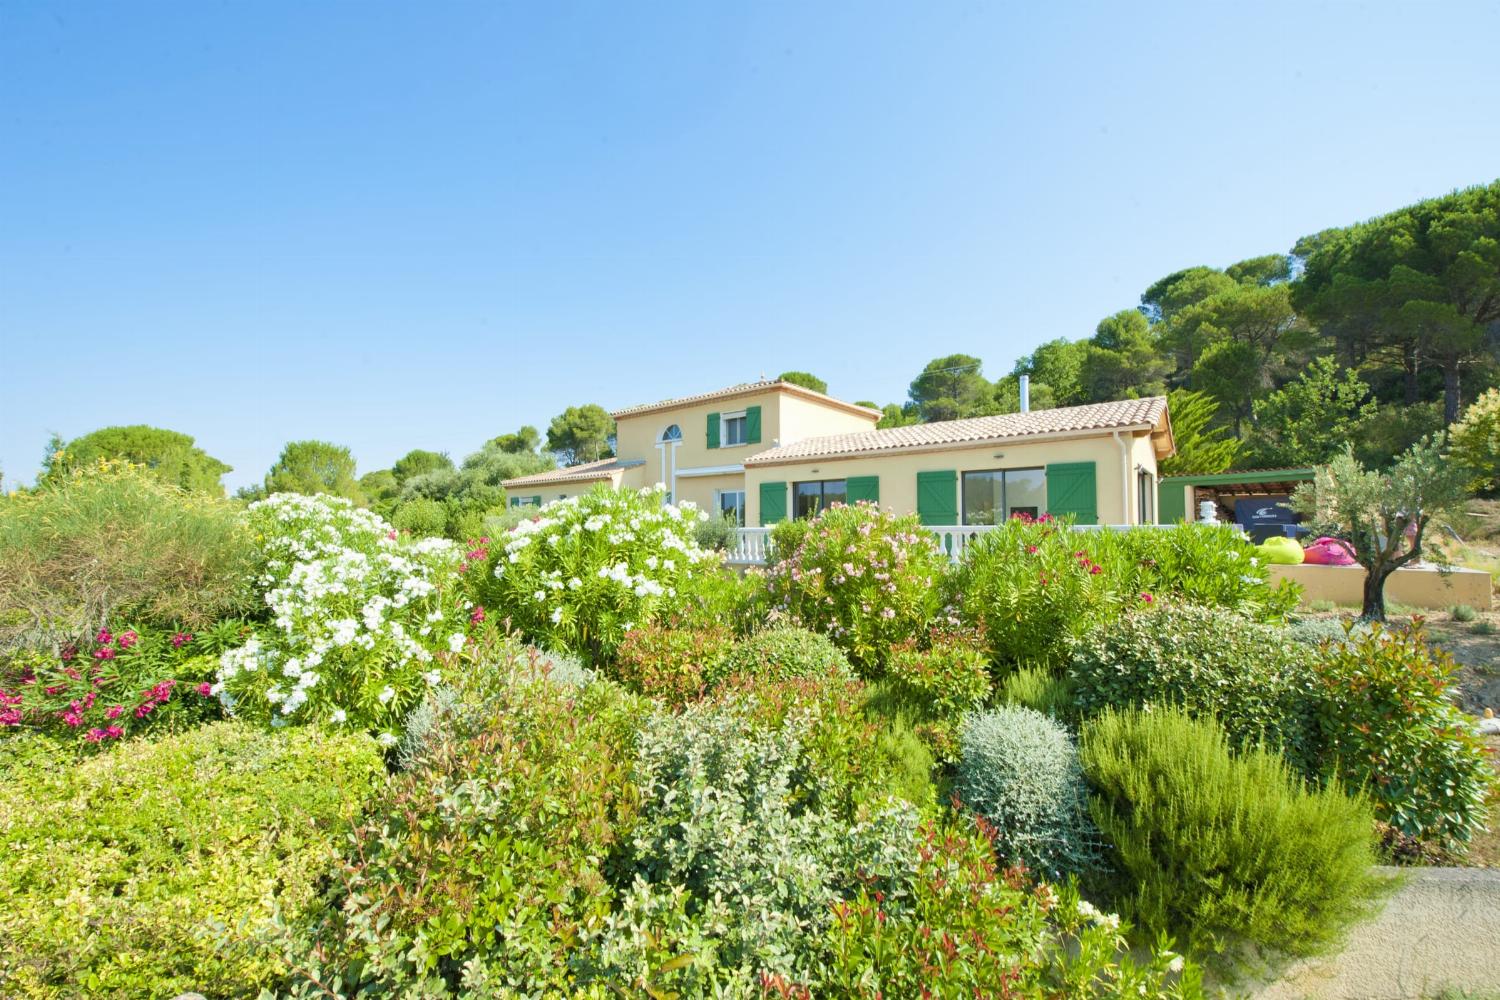 Villa de vacances dans le sud de la France